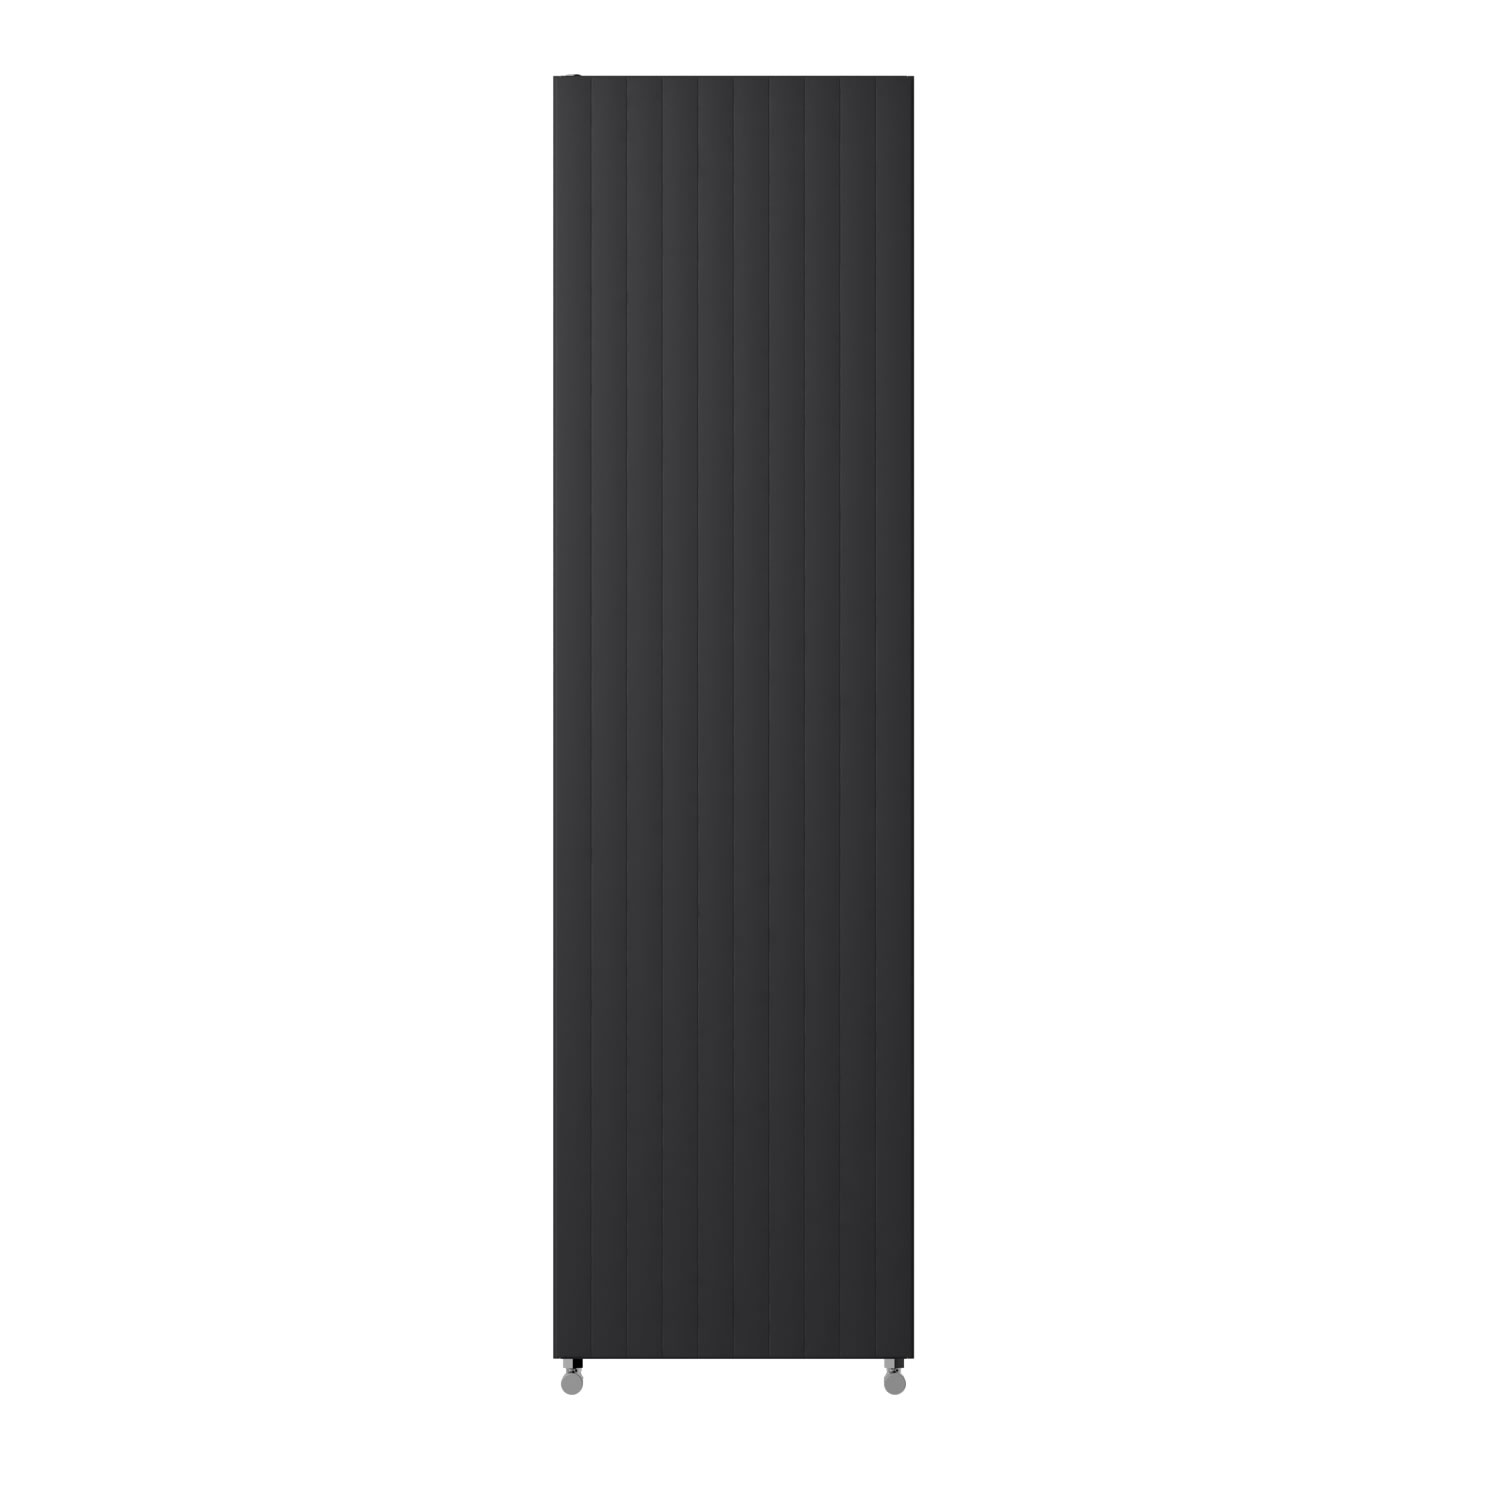 Softline Deco Vertical Concept radiator loyalty reward